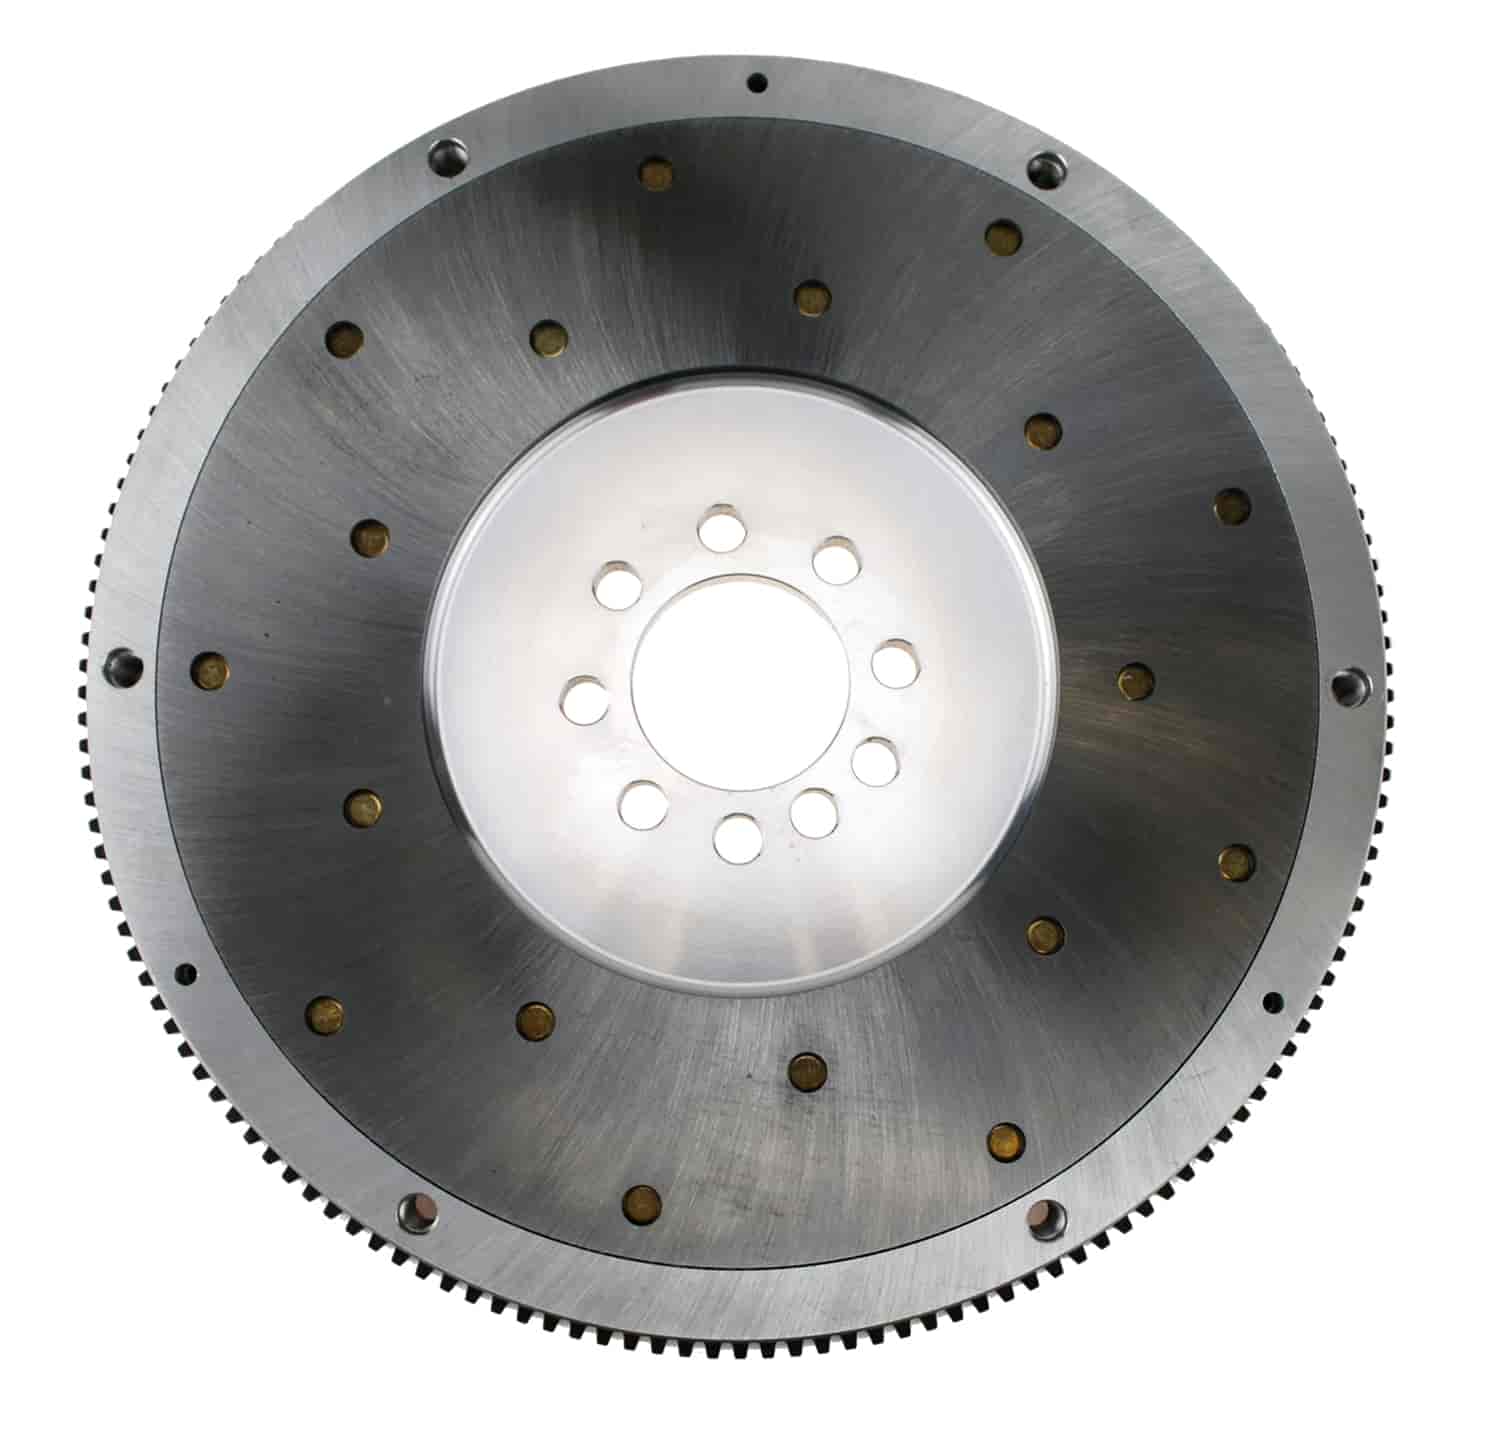 Billet Aluminum Flywheel Use Only for Corvette C-4 Conversion Kits 798-90-0820 & 798-90-0830